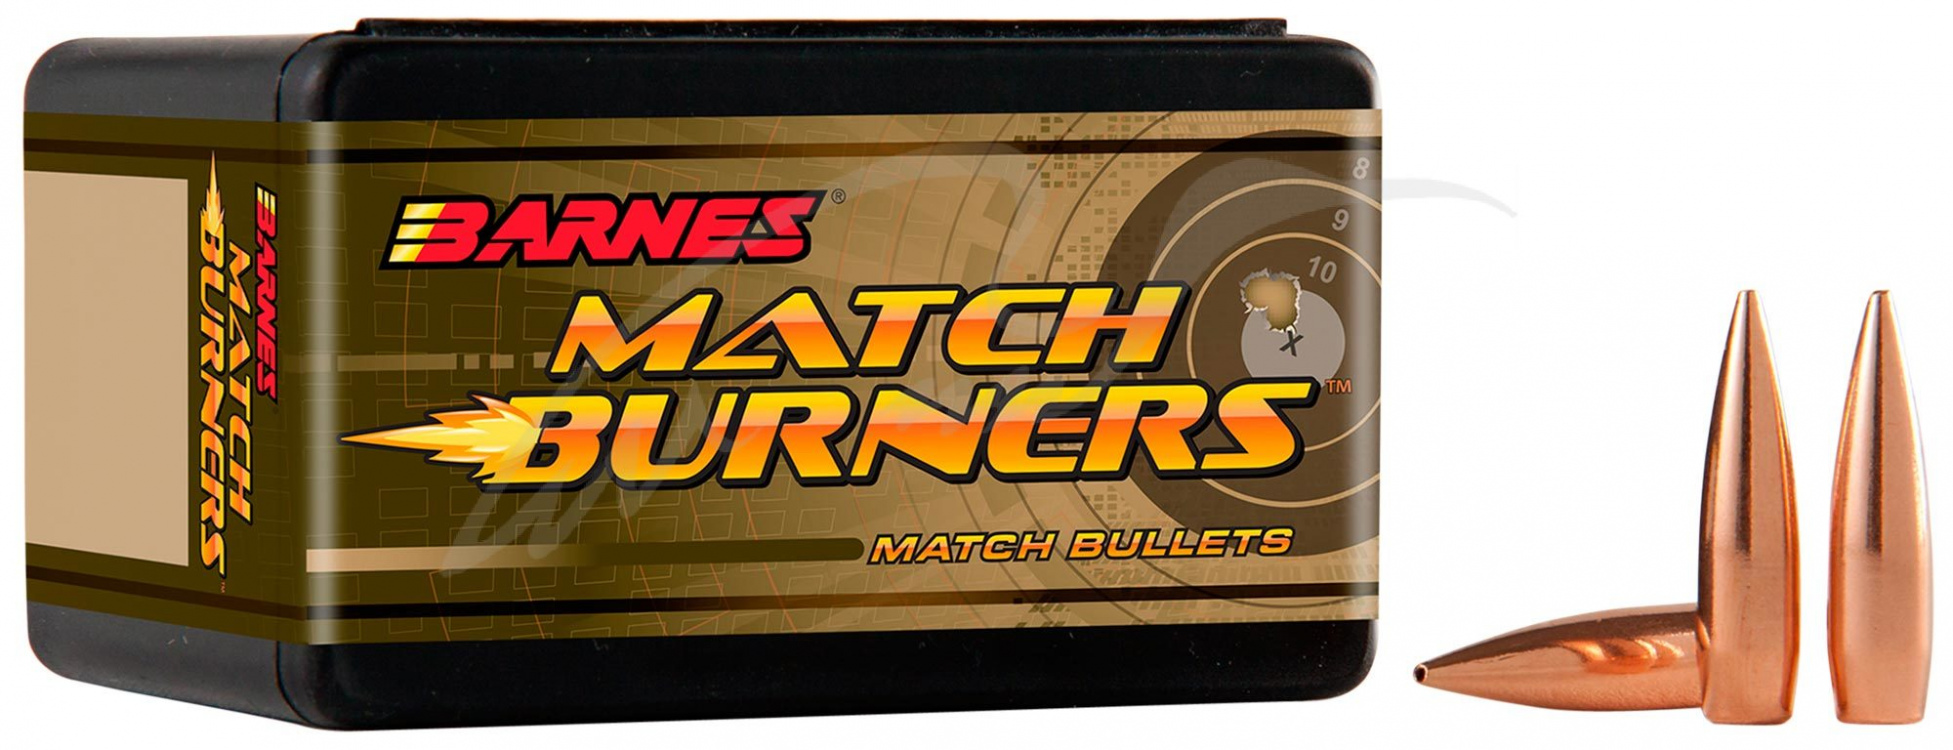 Пуля Barnes BT Match Burner кал. 6,5 мм масса 9,07 г/140 гран